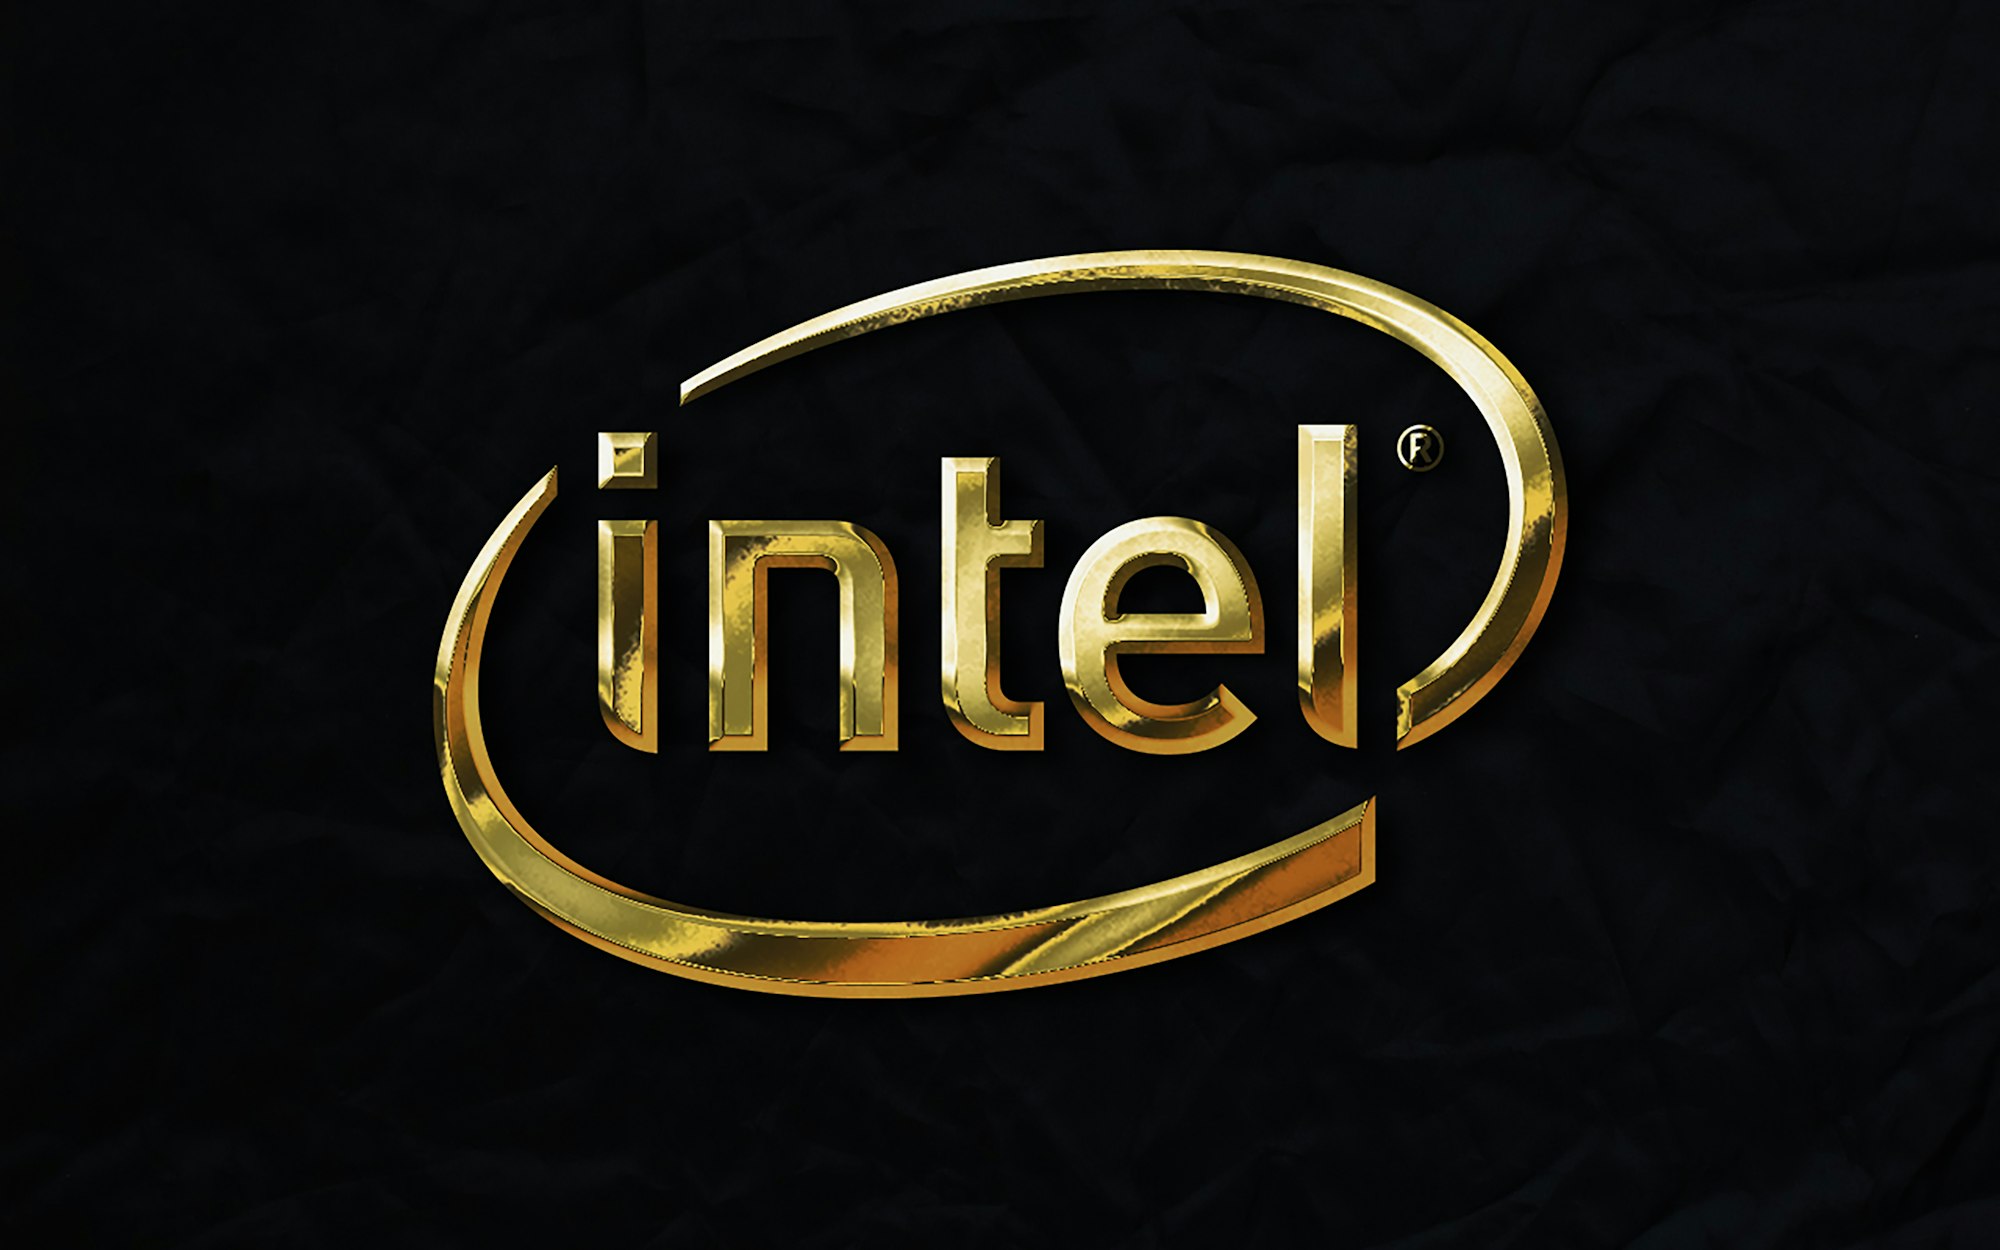 Golden Black производитель. Новый чипи от Intel для майнинга. Ferra logo. Logo Black and Silver or Gold. Intel fails